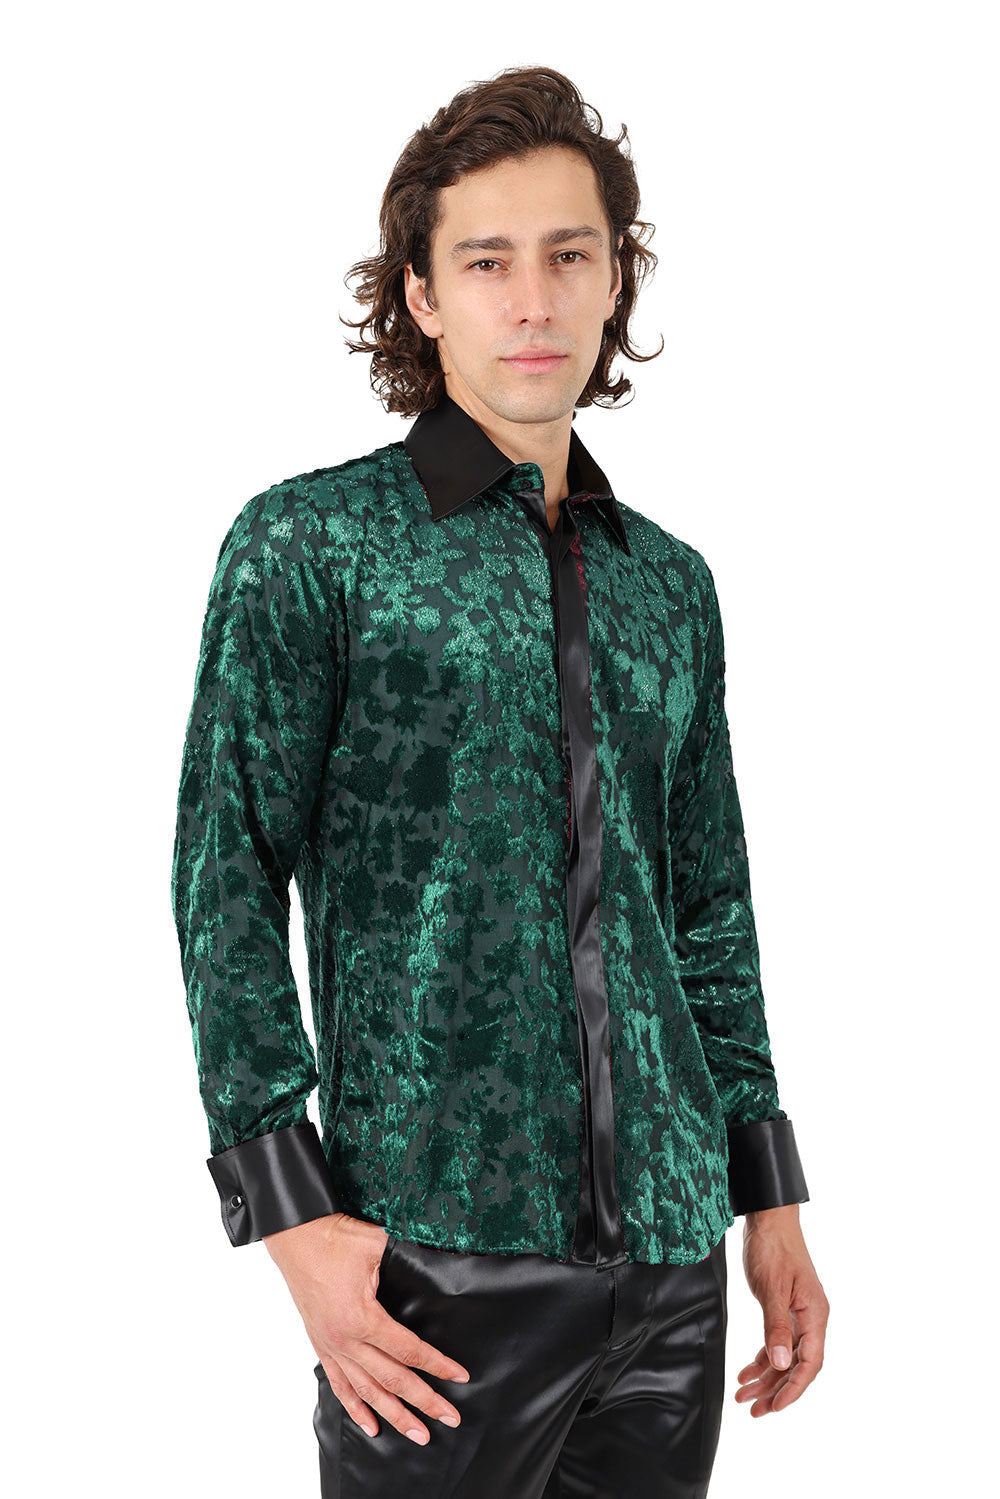 Barabas Men's Luxury French Cuff Long Sleeve Button Down Shirt FCS1003 Emerald